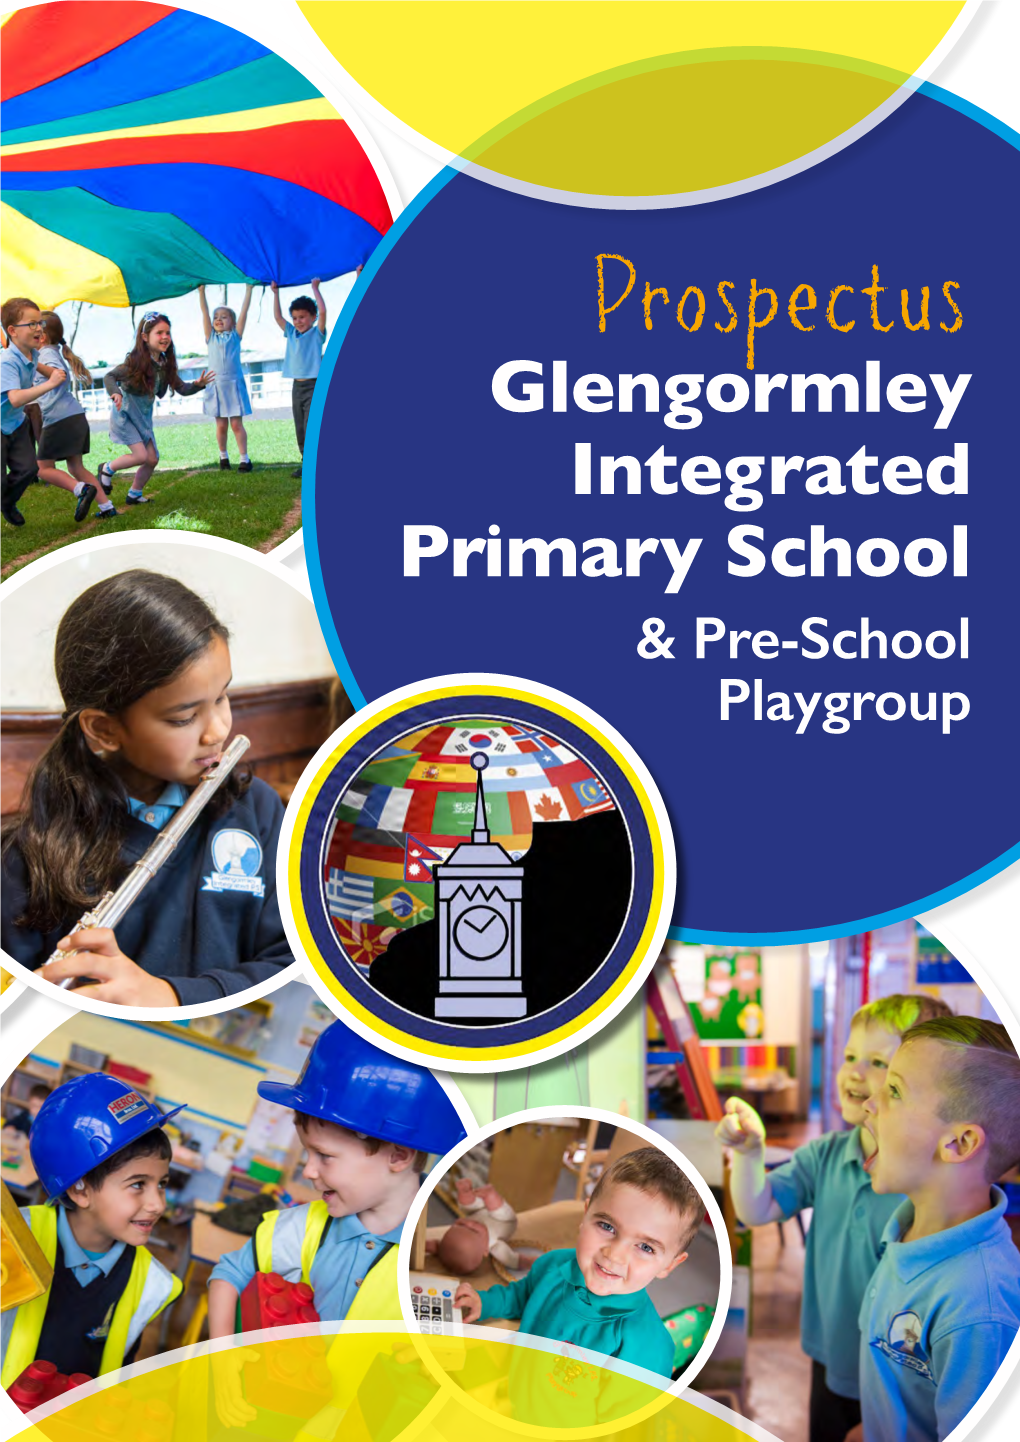 Prospectus Glengormley Integrated Primary School & Pre-School Playgroup Contents